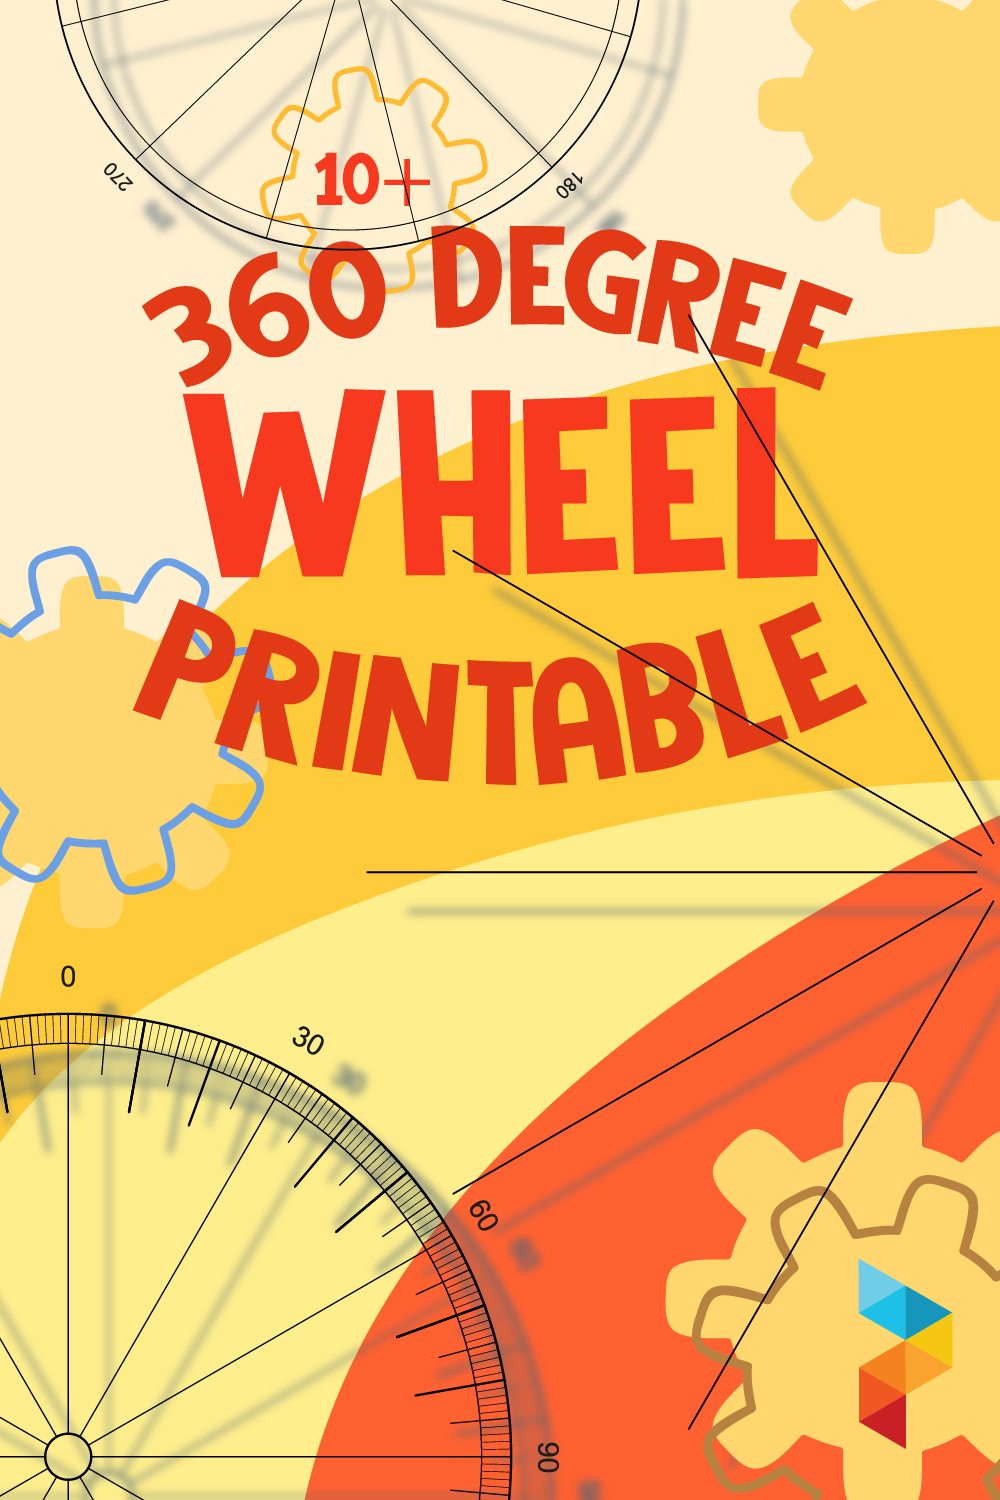 360 Degree Wheel